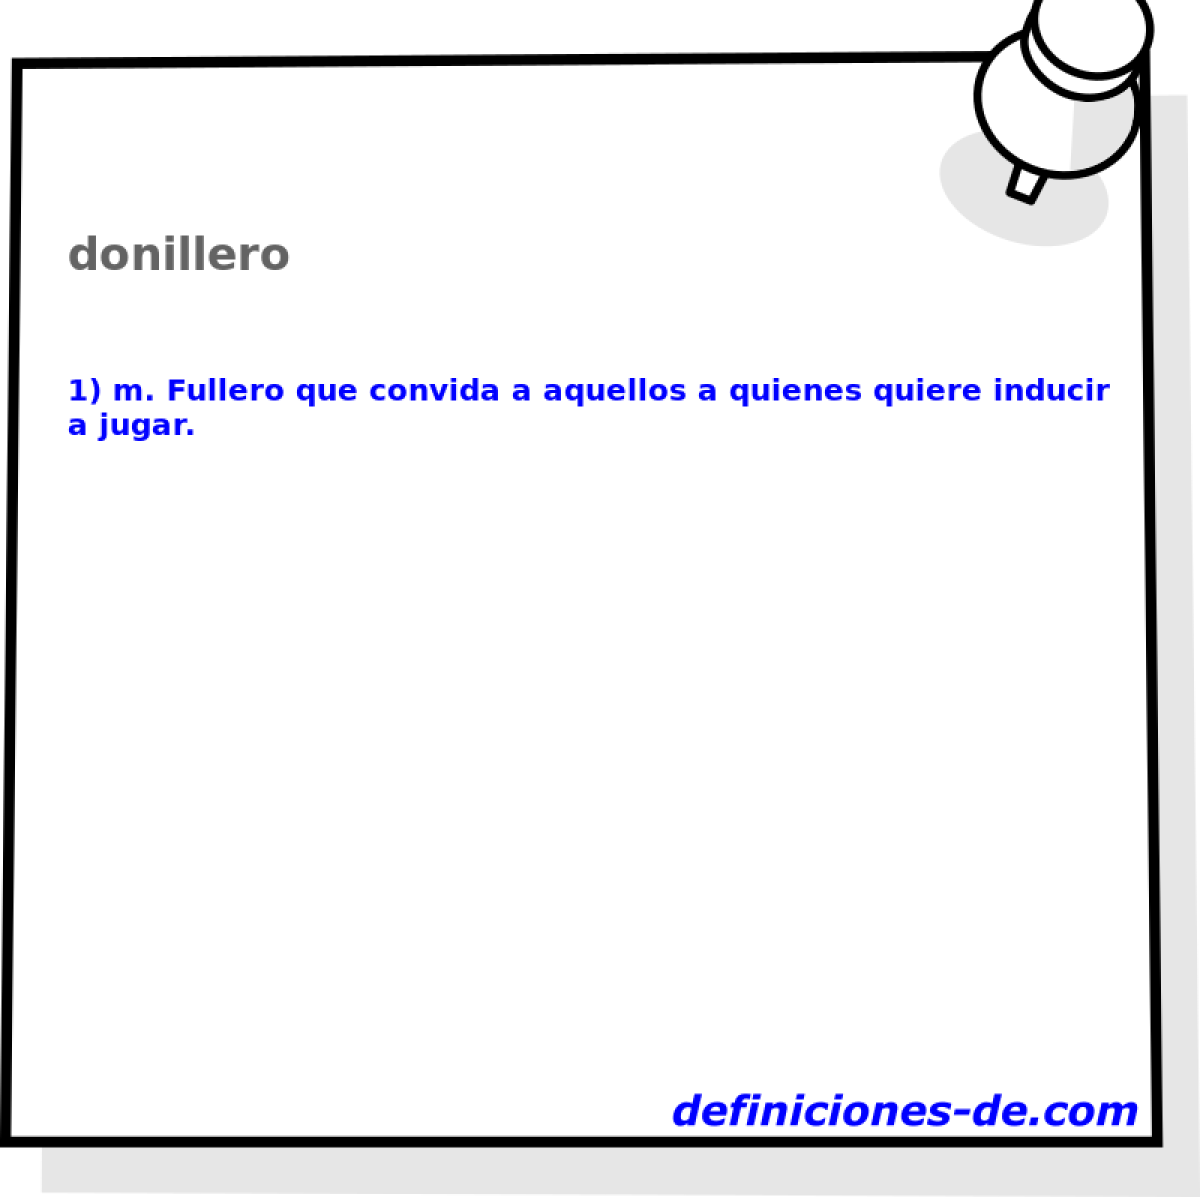 donillero 